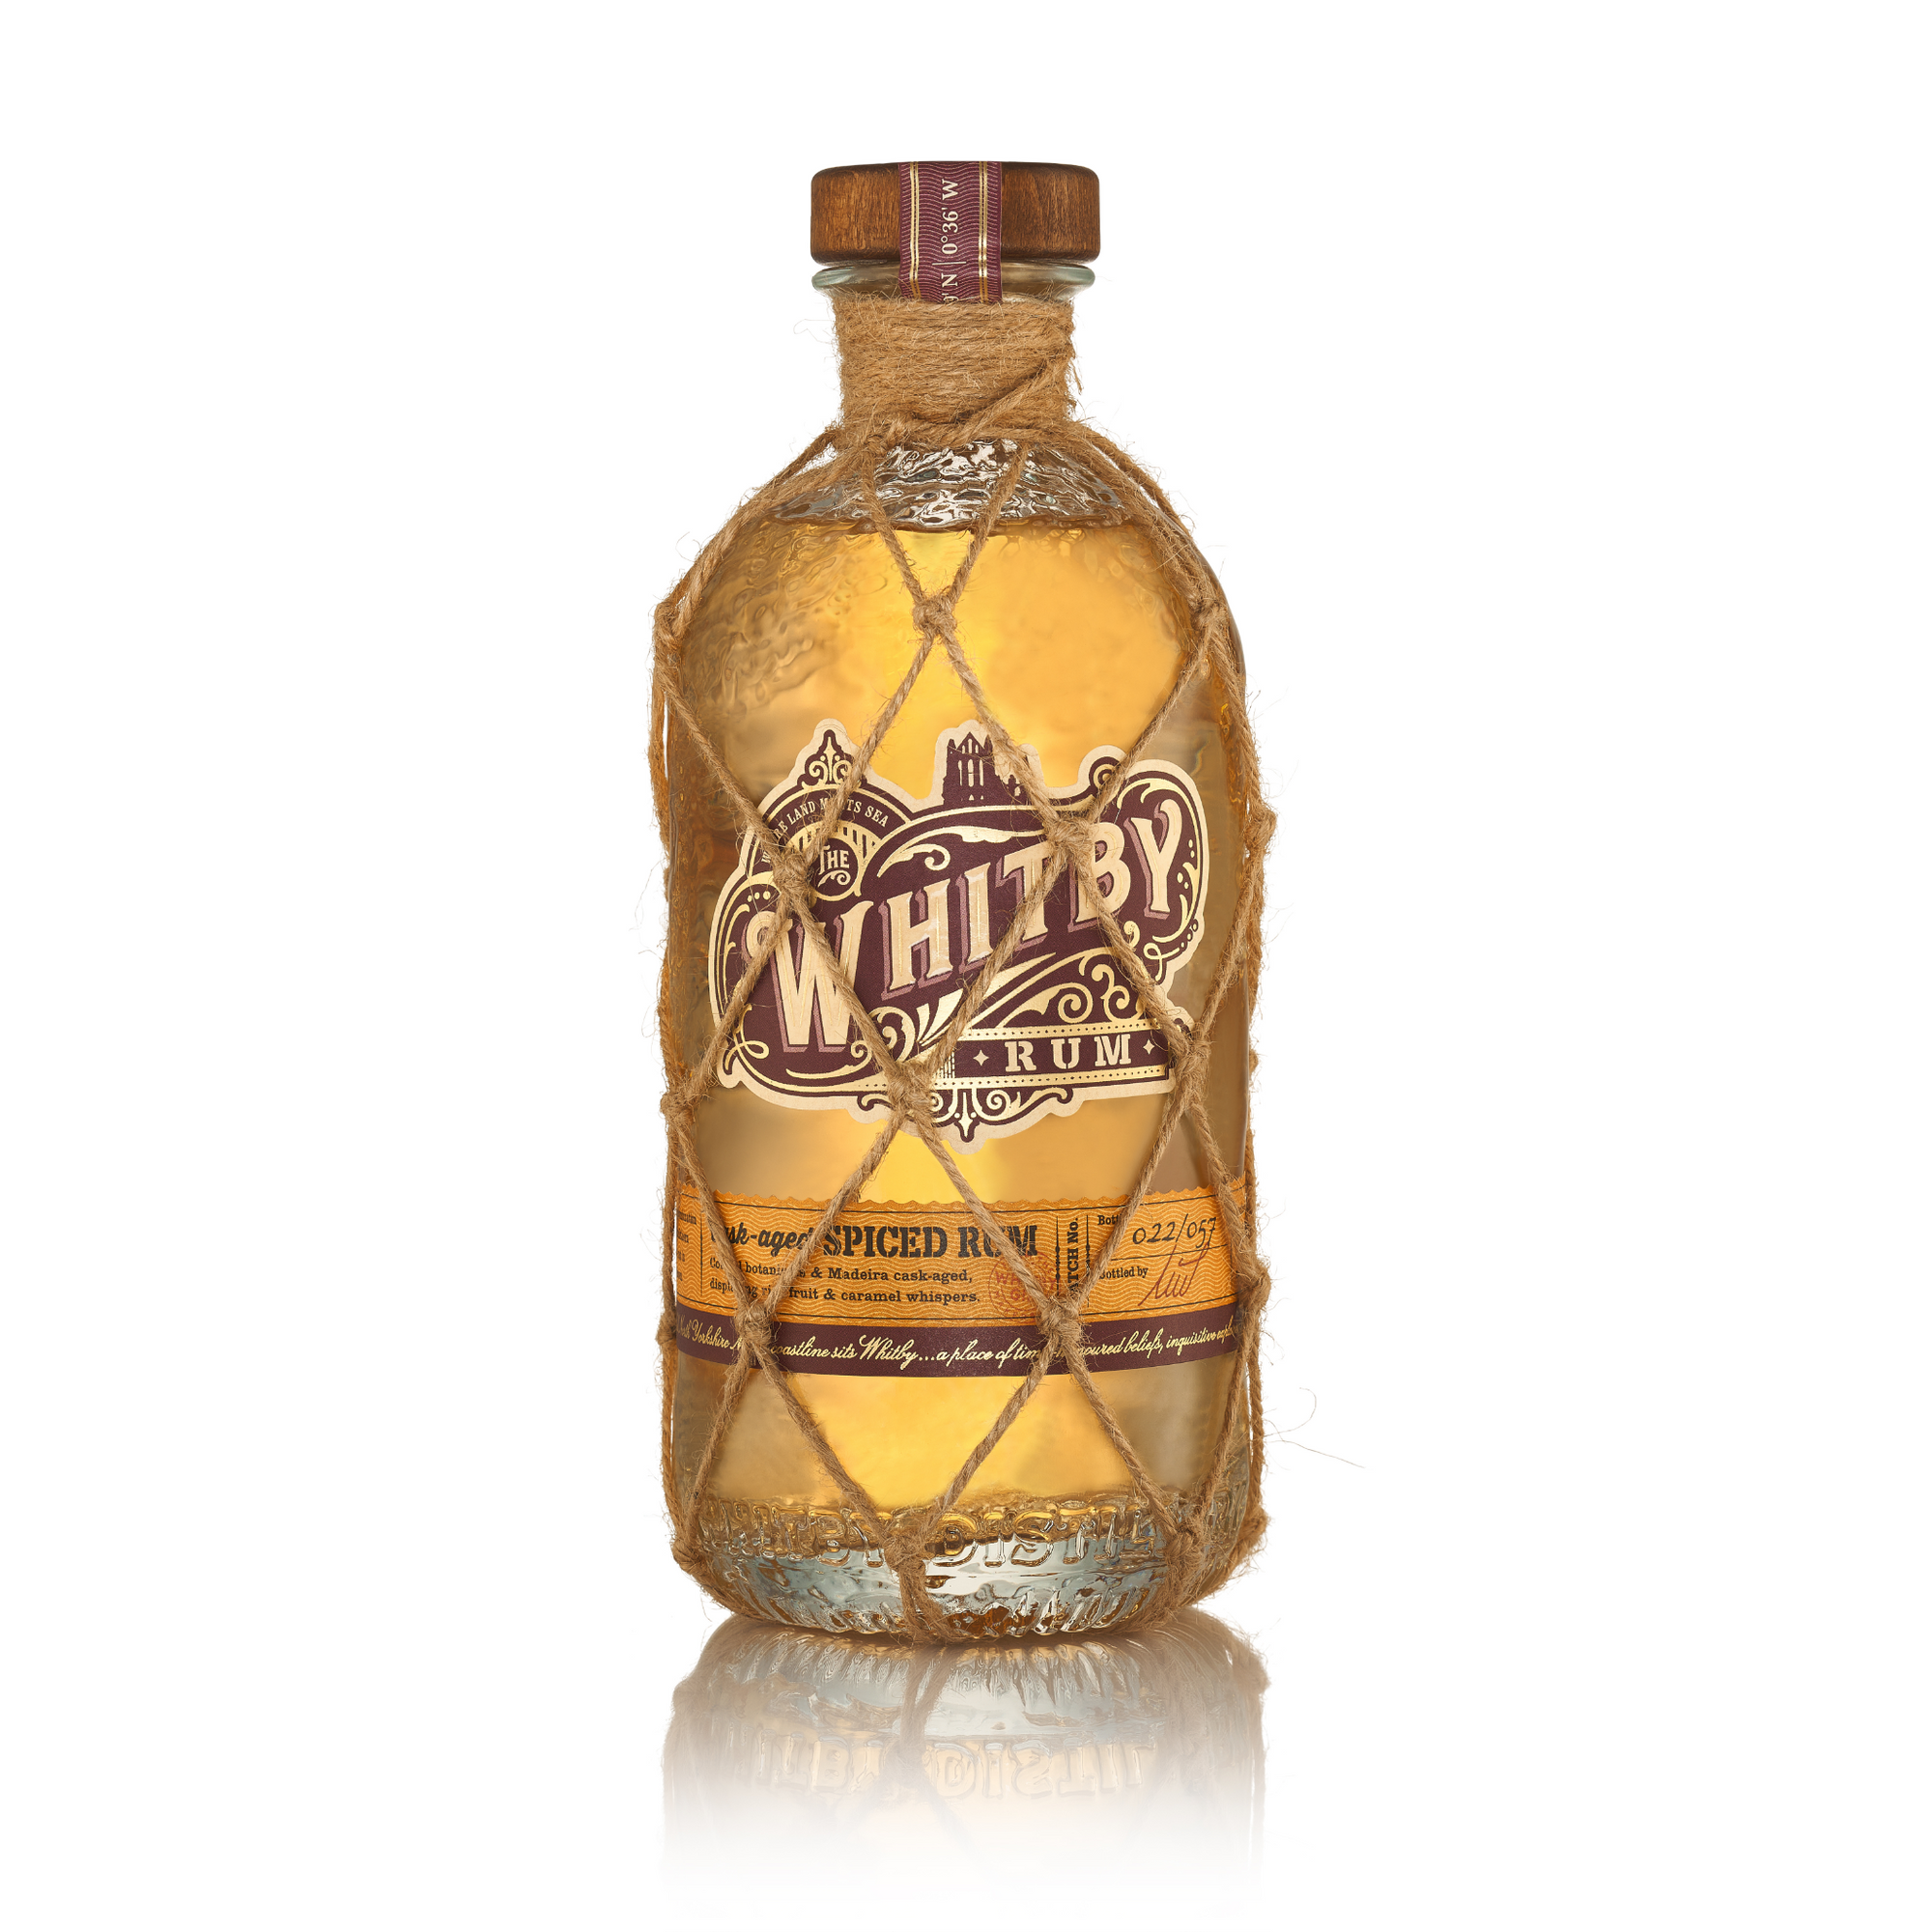 Whitby Rum